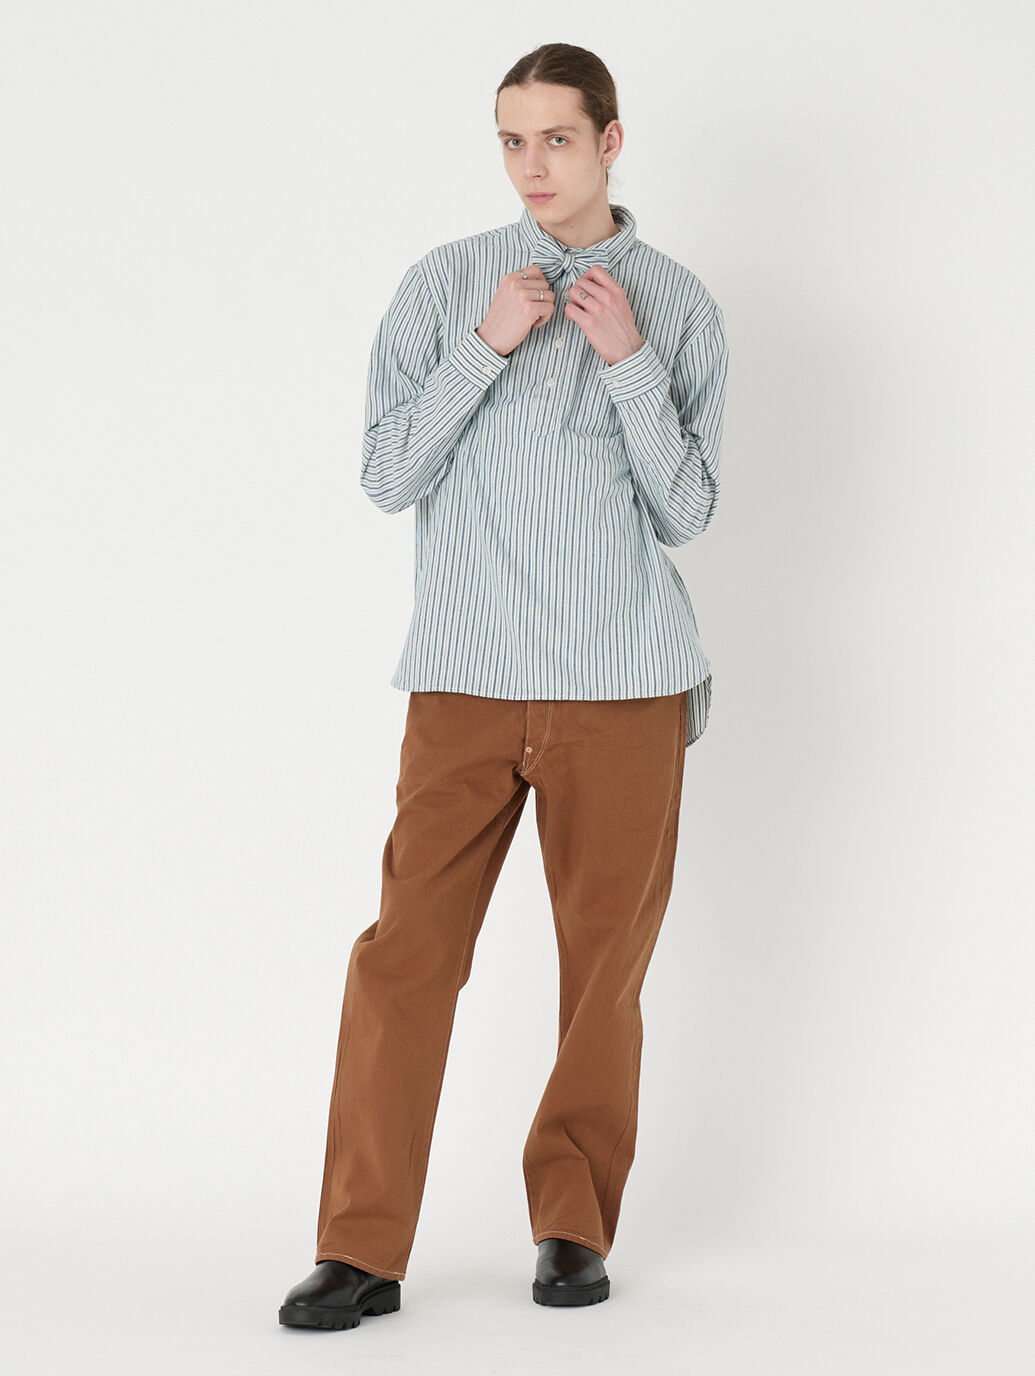 LEVI'S® VINTAGE CLOTHING ポップオーバー サンセットシャツ CLASSIC